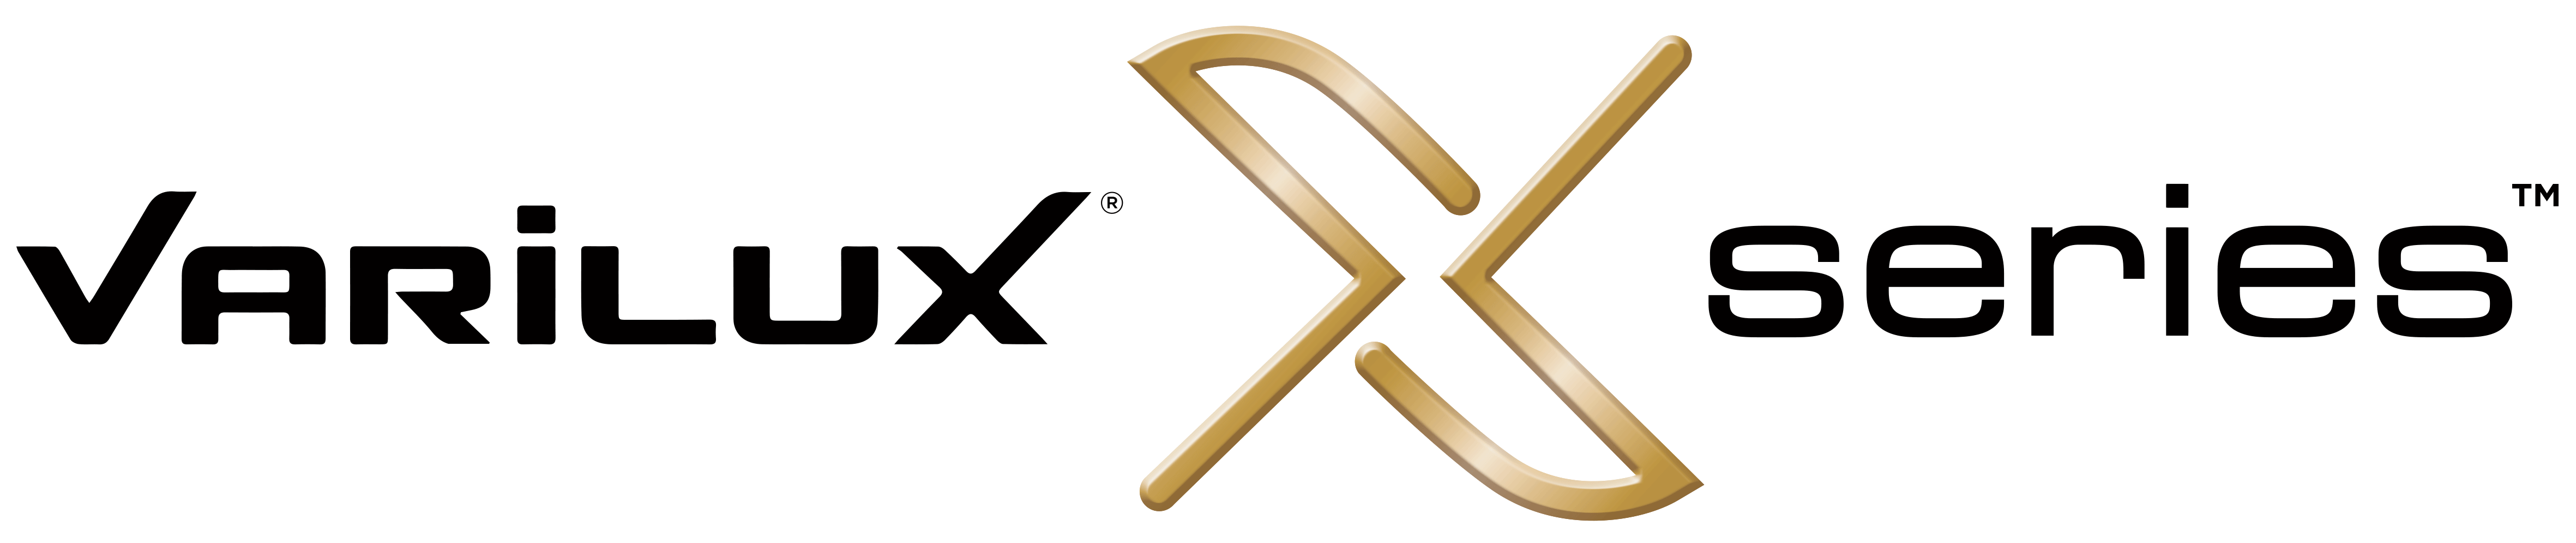 Varilux X series logo